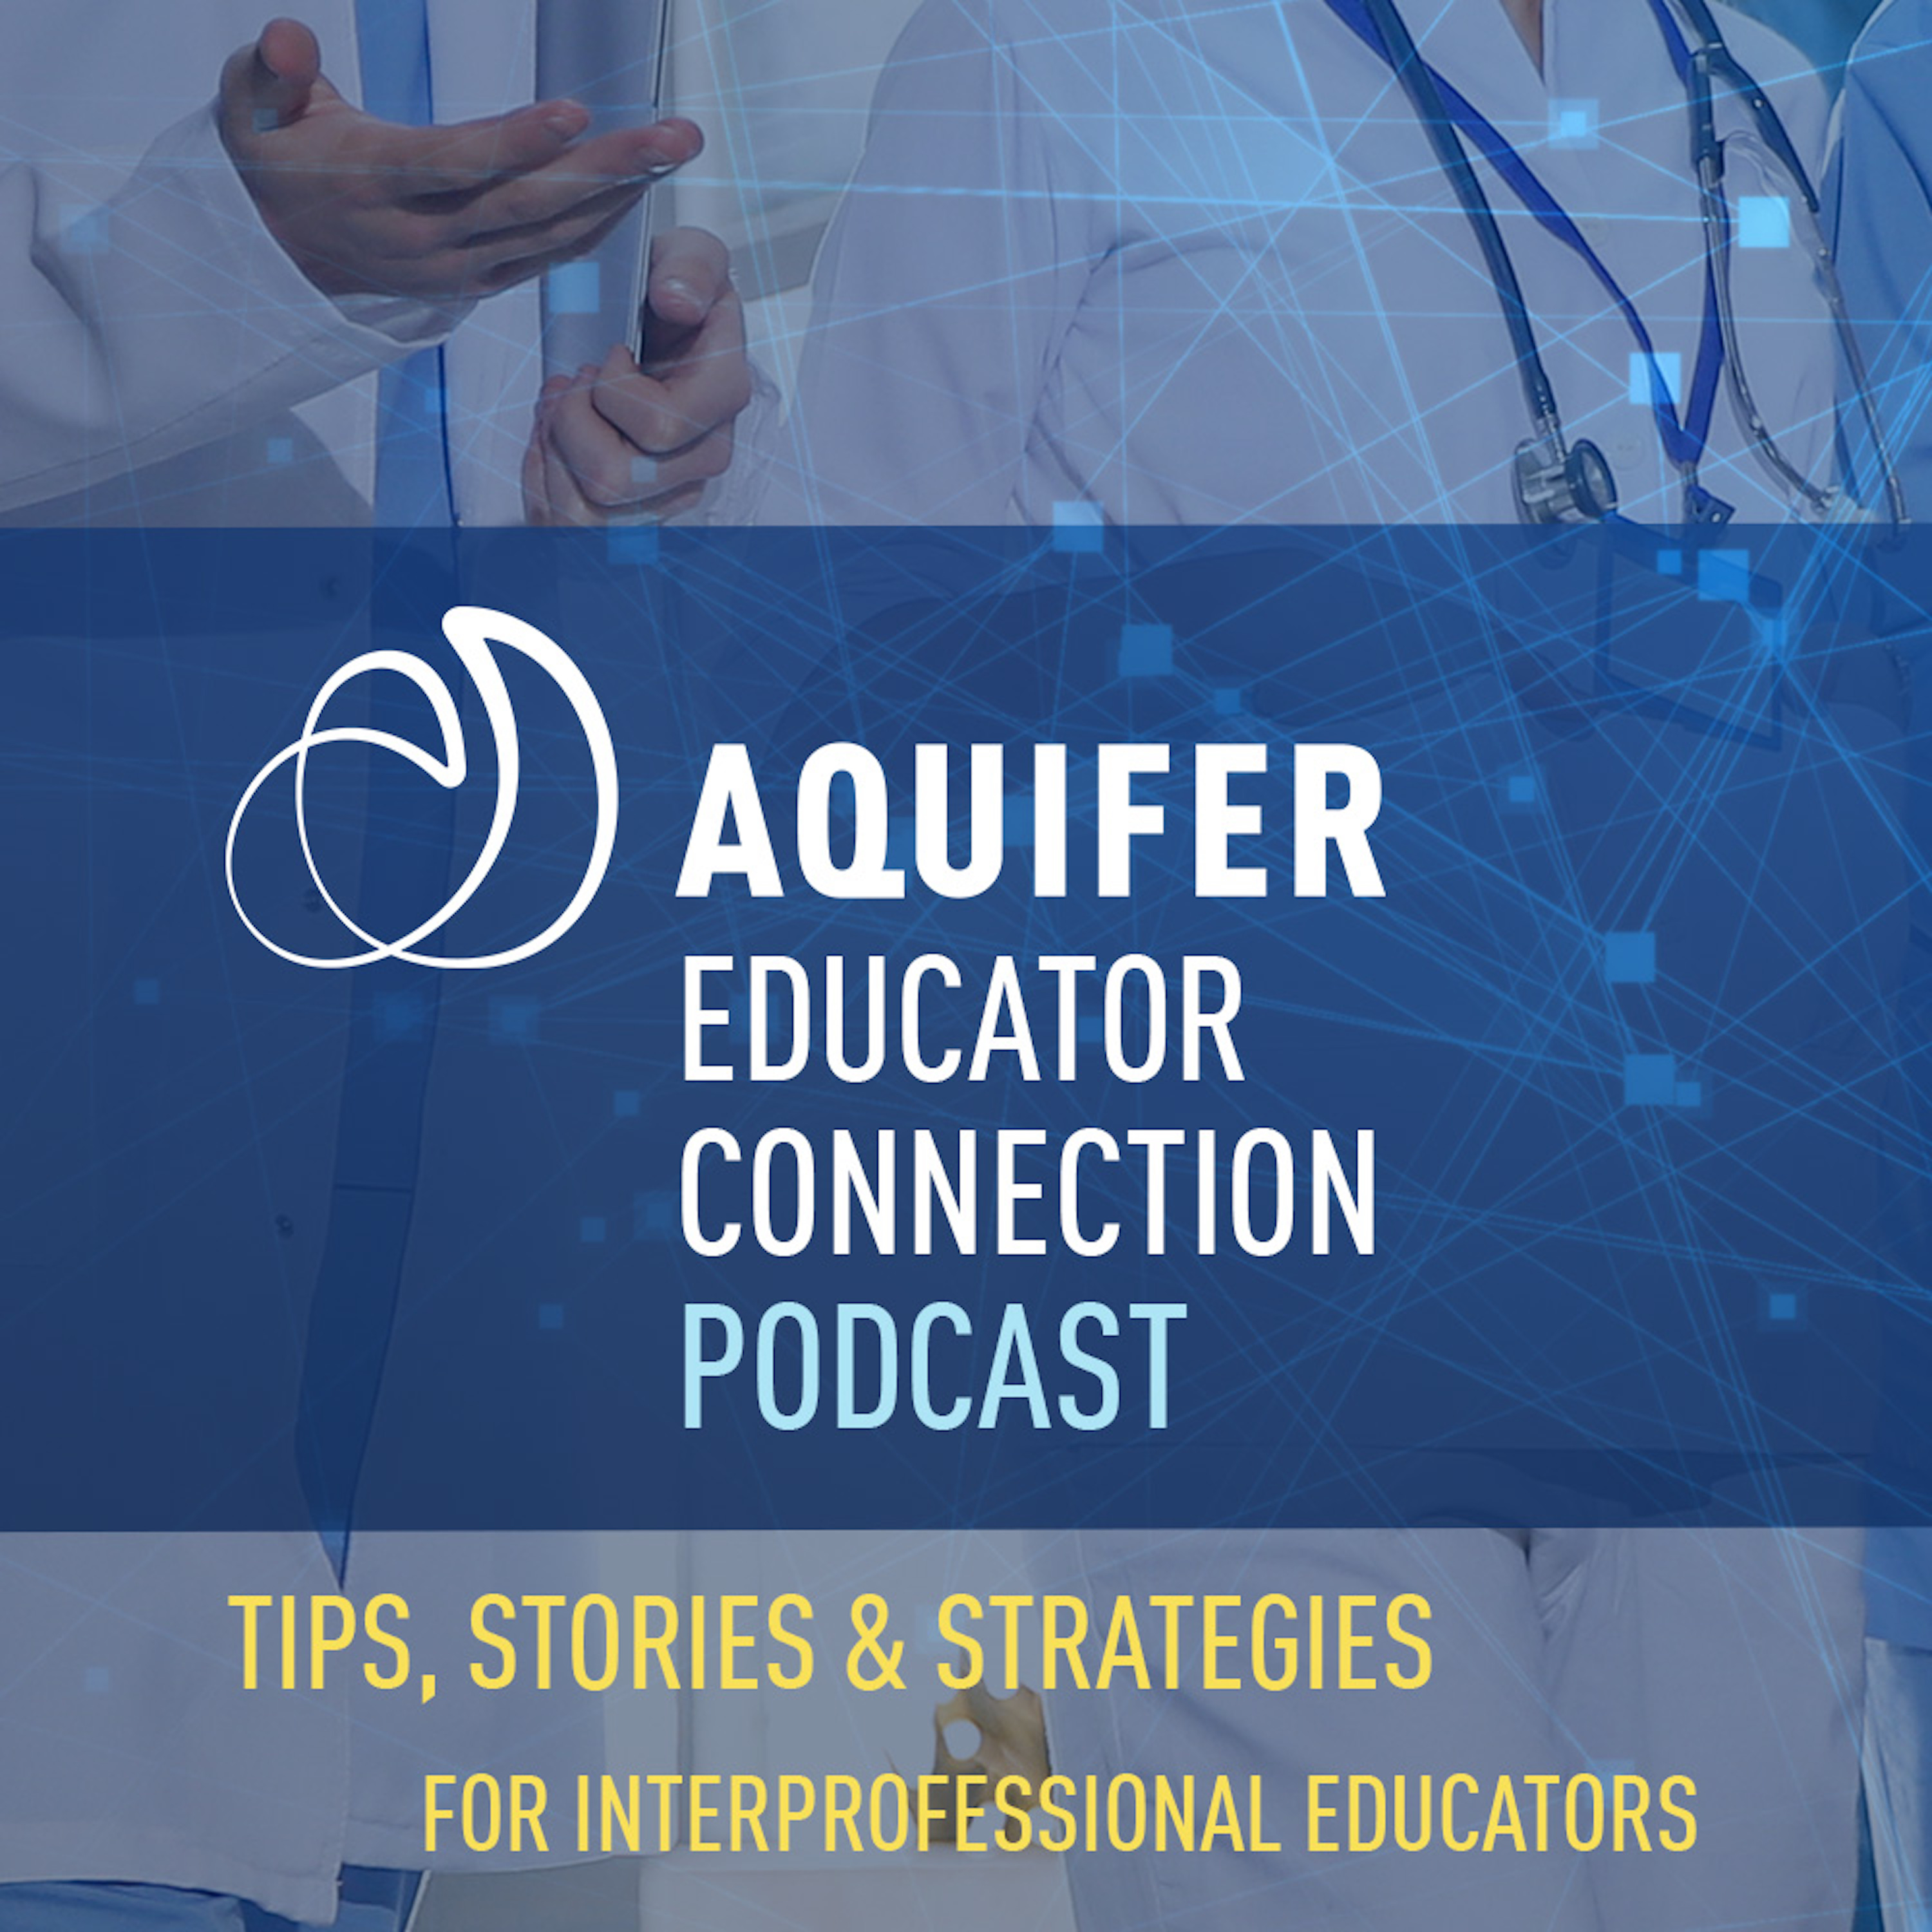 Artwork for podcast Aquifer Educator Connection Podcast